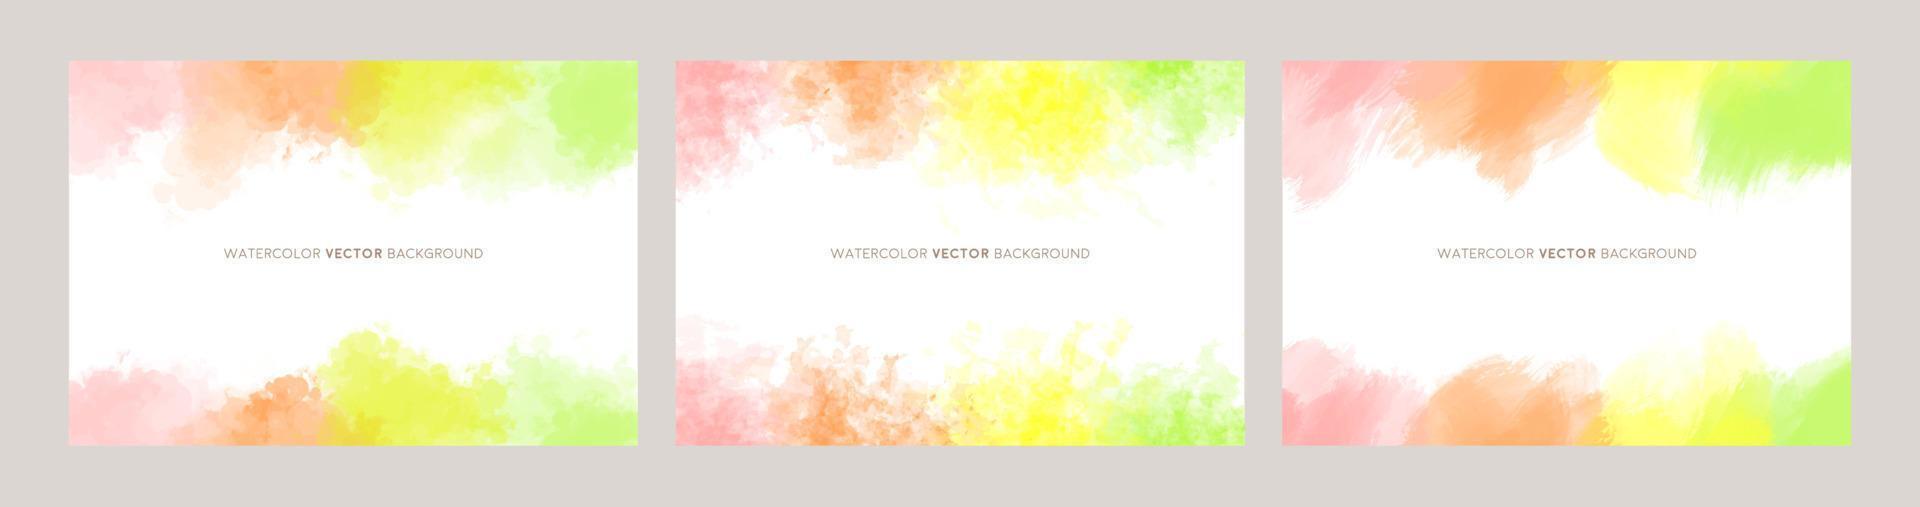 watercolor vector background set